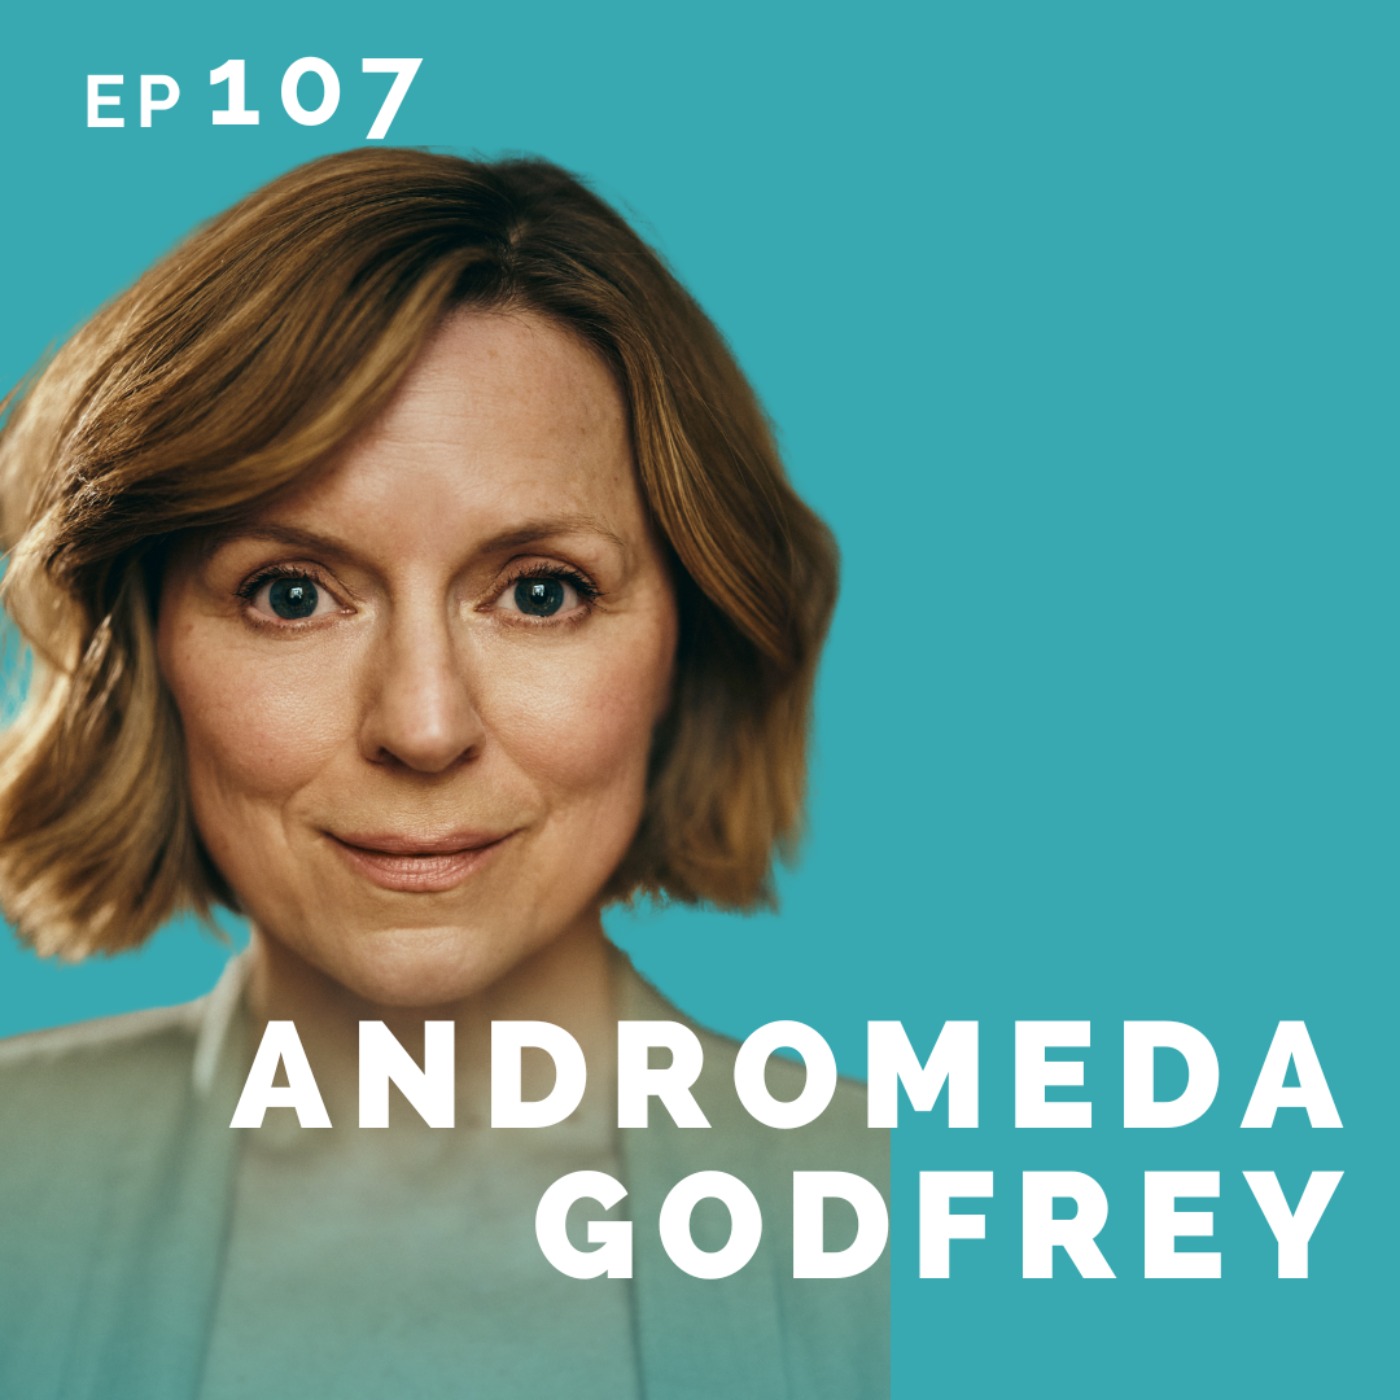 EP 107: Andromeda Godfrey: Photographer, Make-Up Artist, Baker & Mom Turned Actor